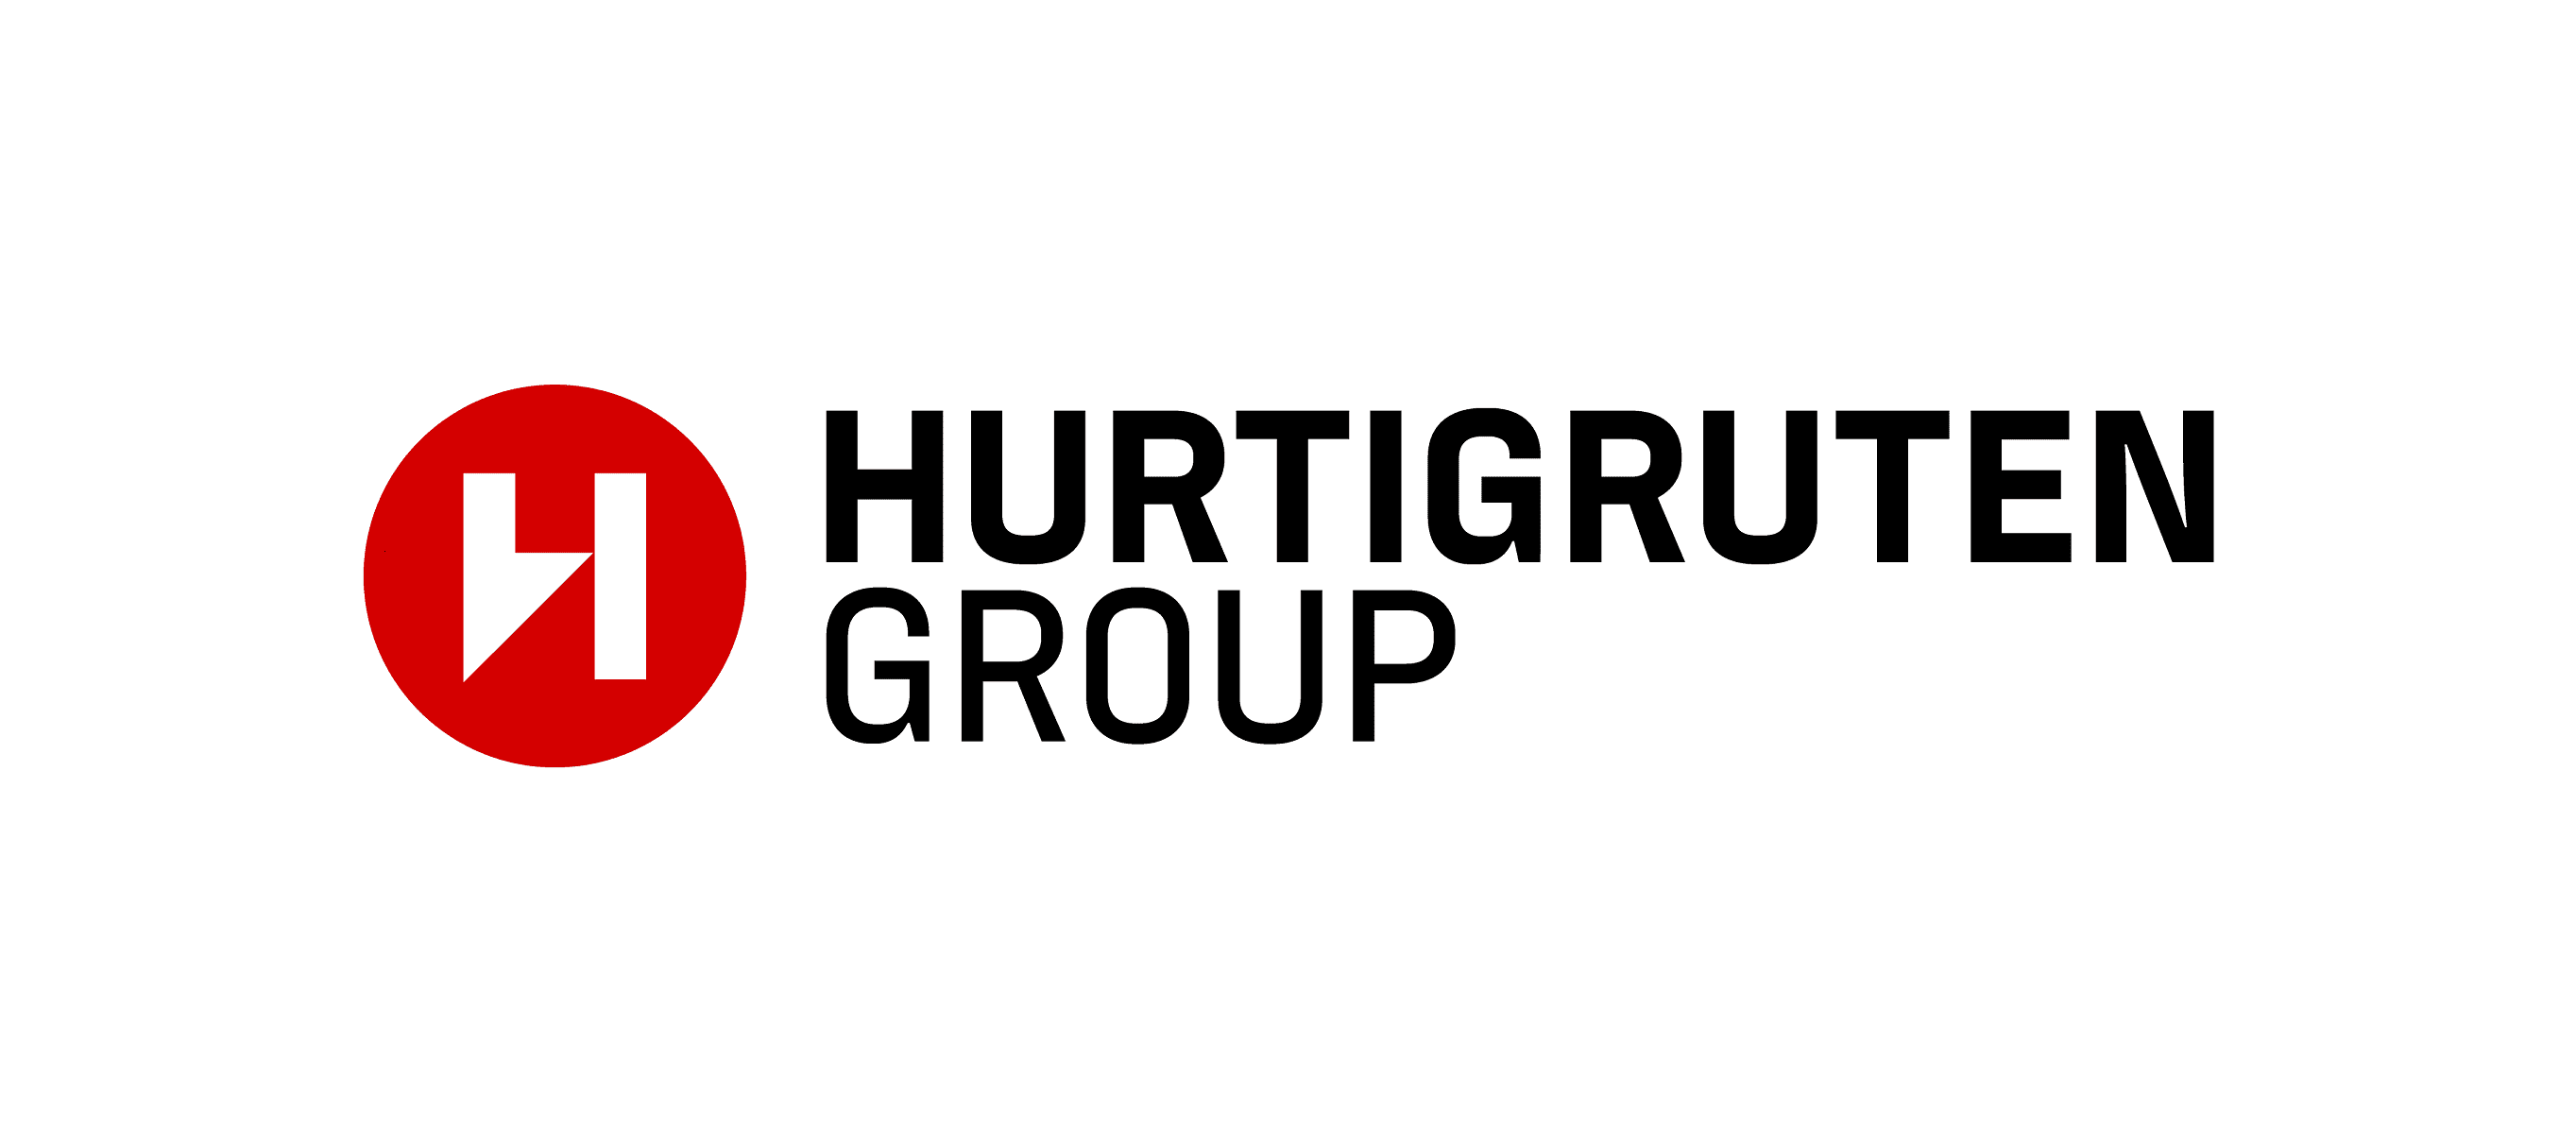 HR GROUP logo POS RGB 3